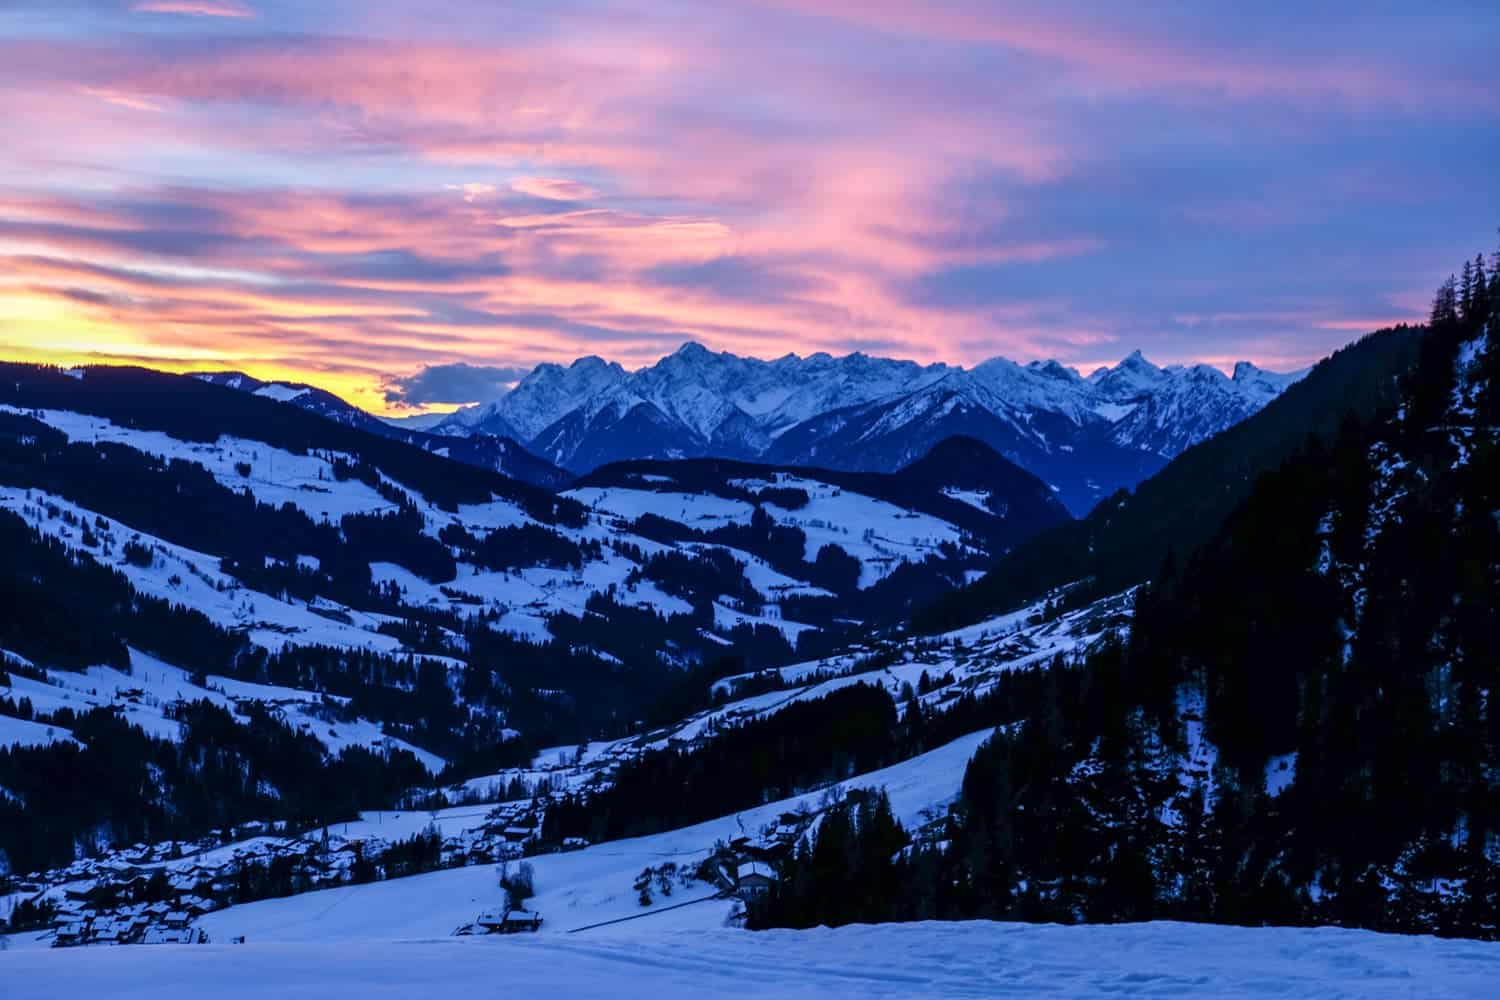 Sunset over Alpbachtal valley in Austria